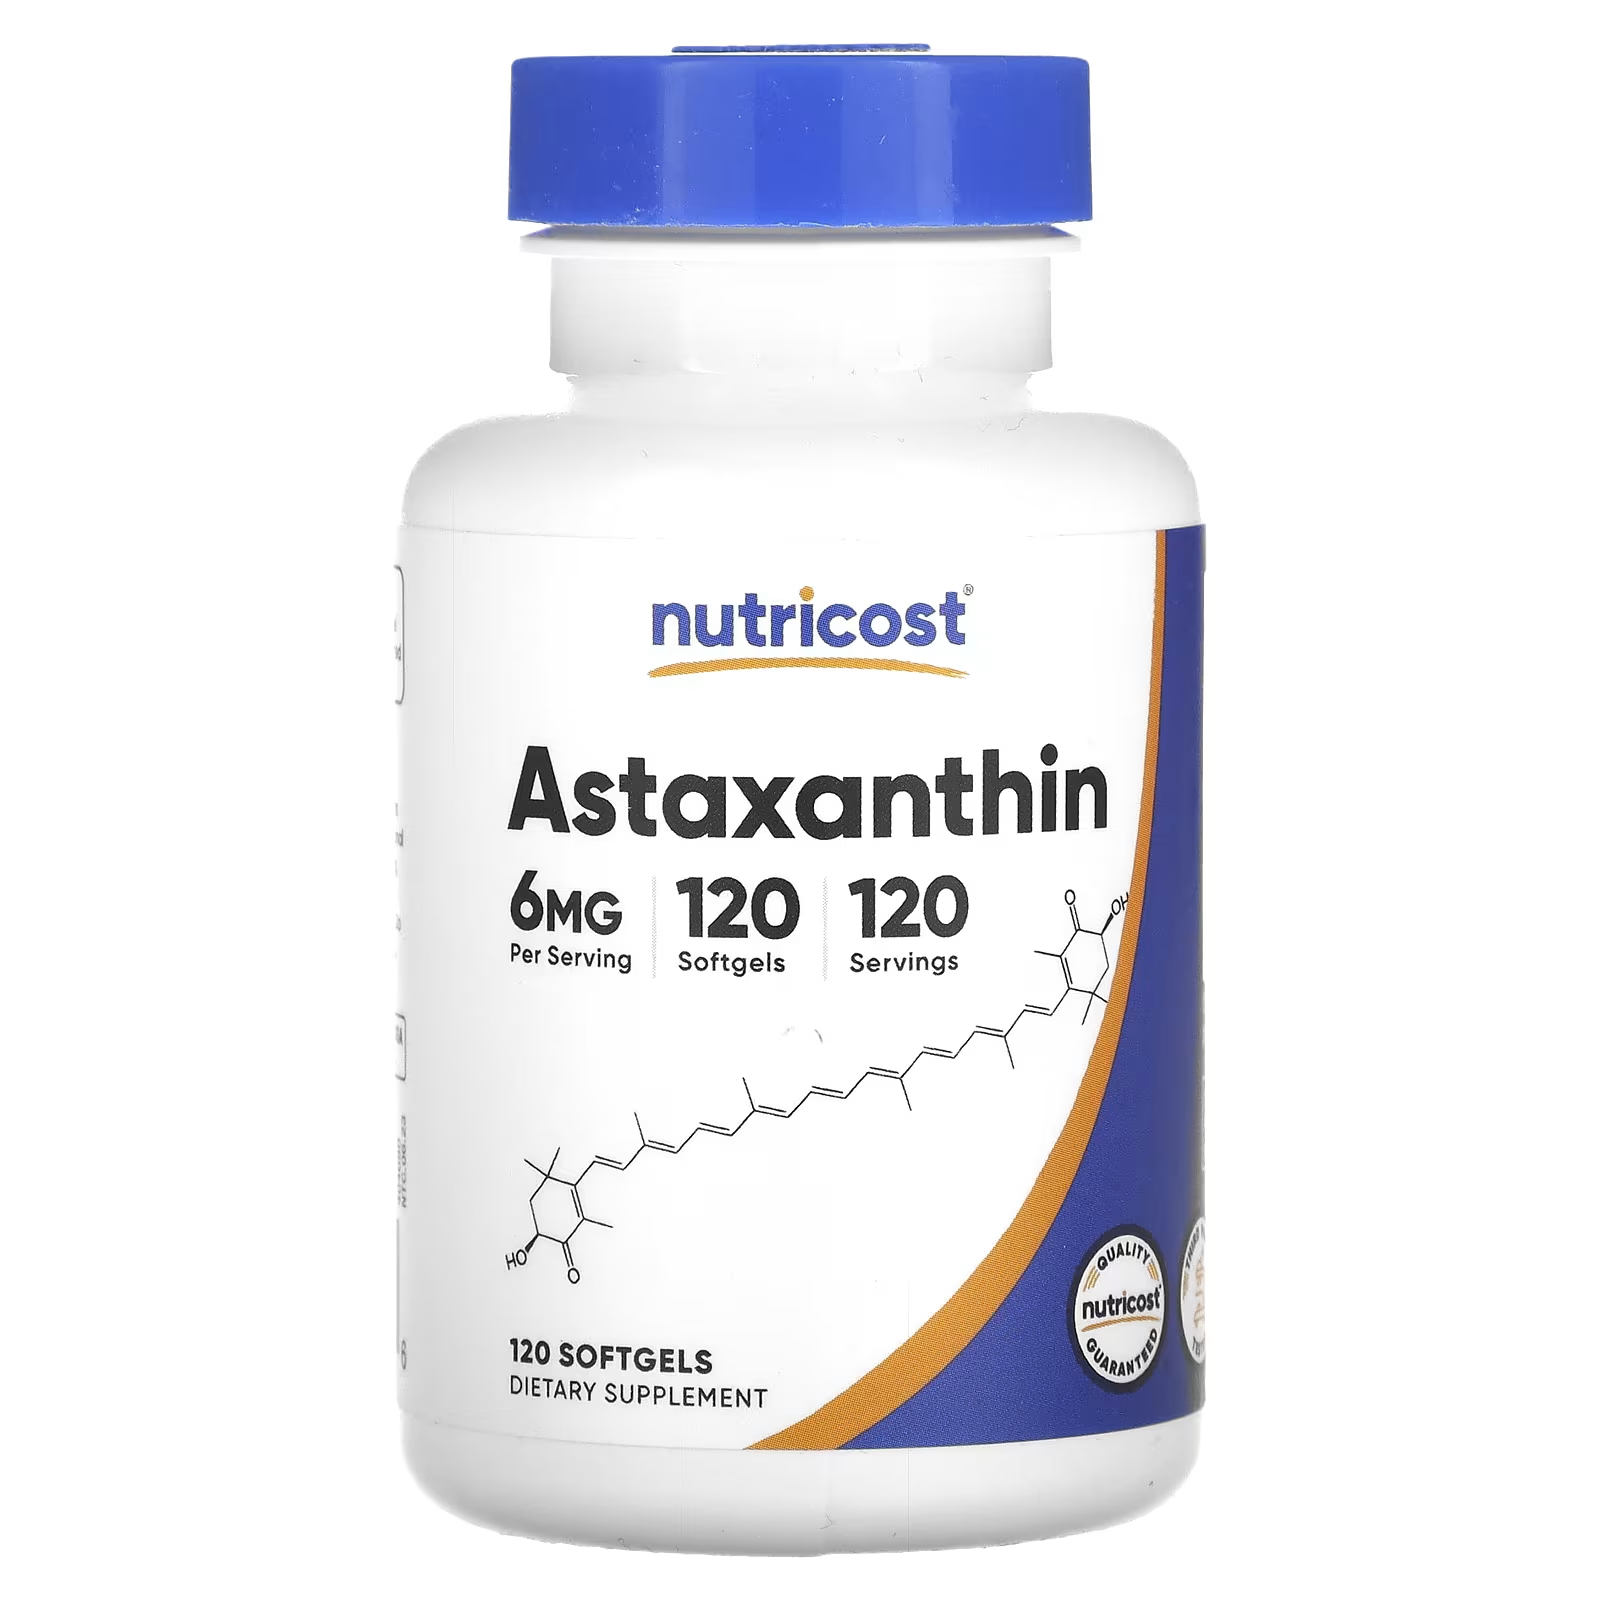 Nutricost Астаксантин 6 мг 120 мягких таблеток california gold nutrition astalif чистый исландский астаксантин 12 мг 120 растительных мягких таблеток